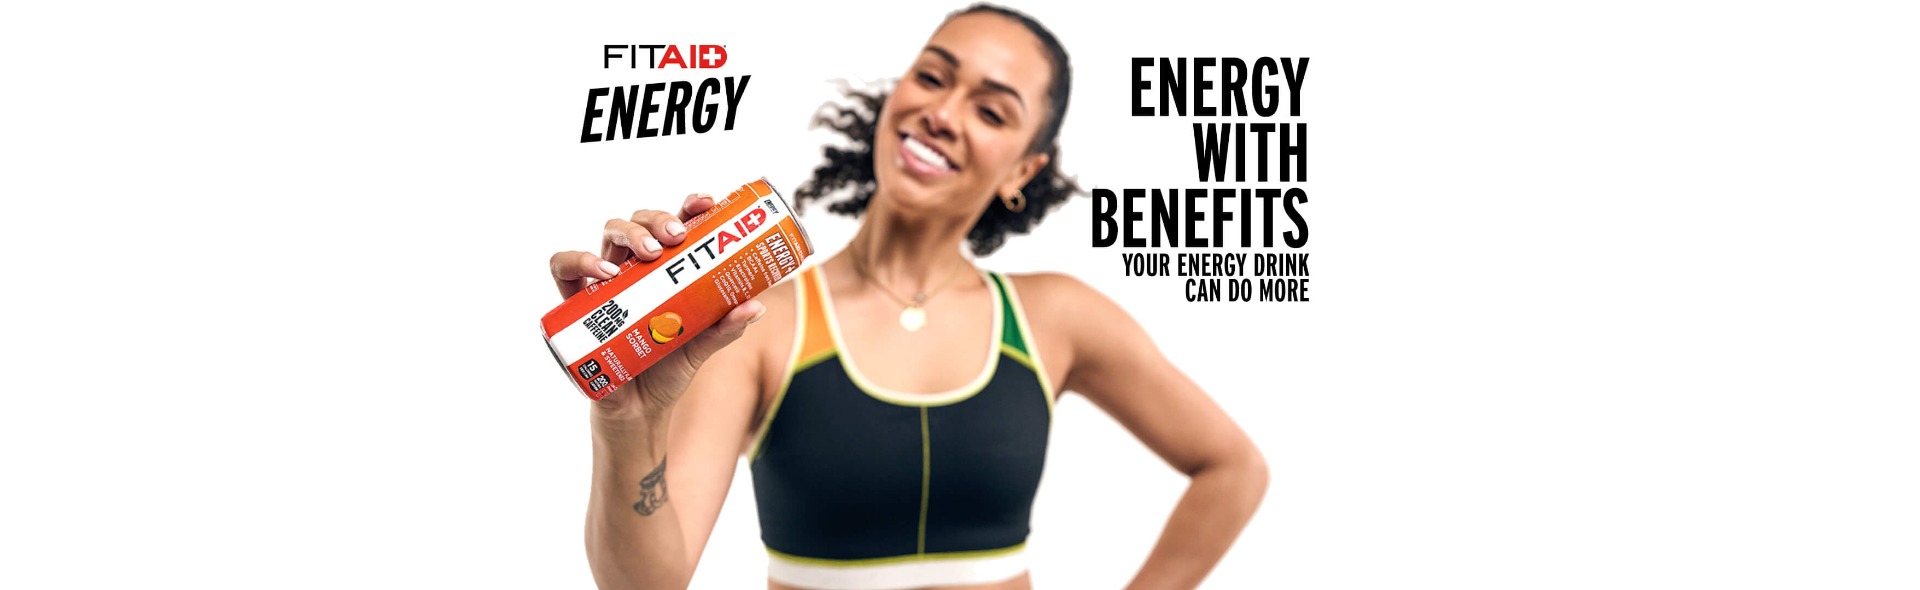 Energy with Benefits